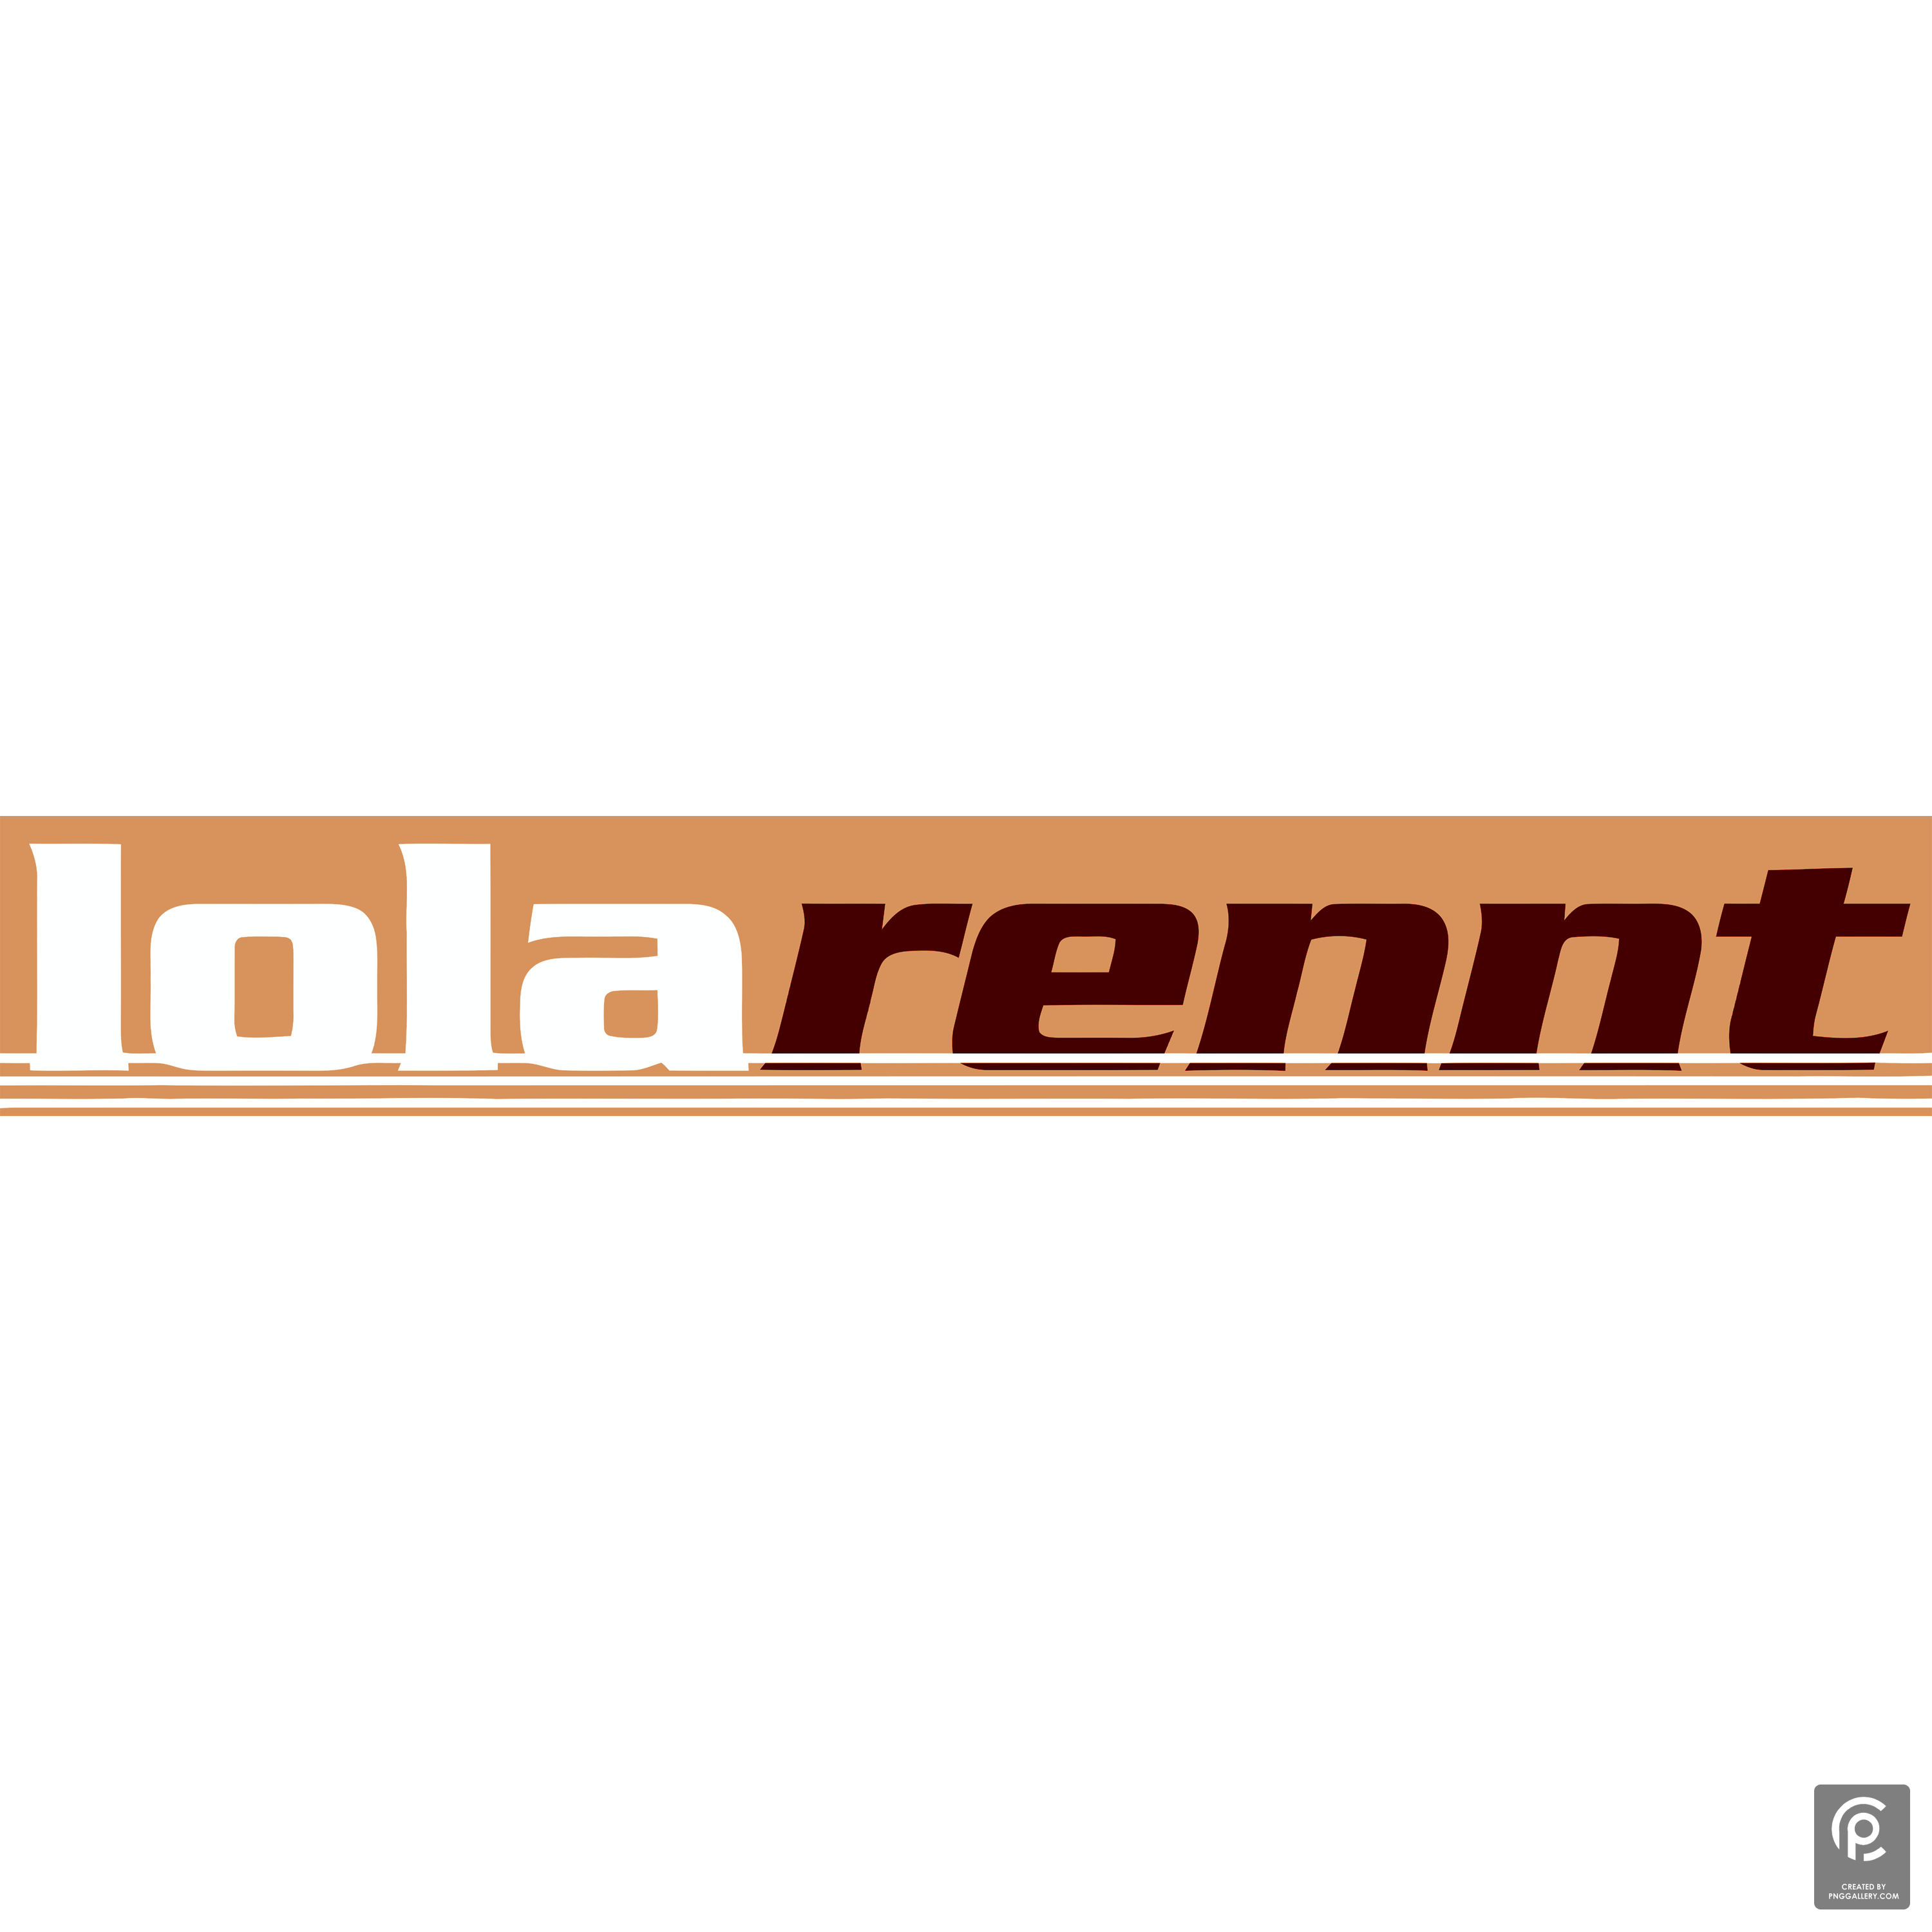 Lola Rennt Logo Transparent Picture